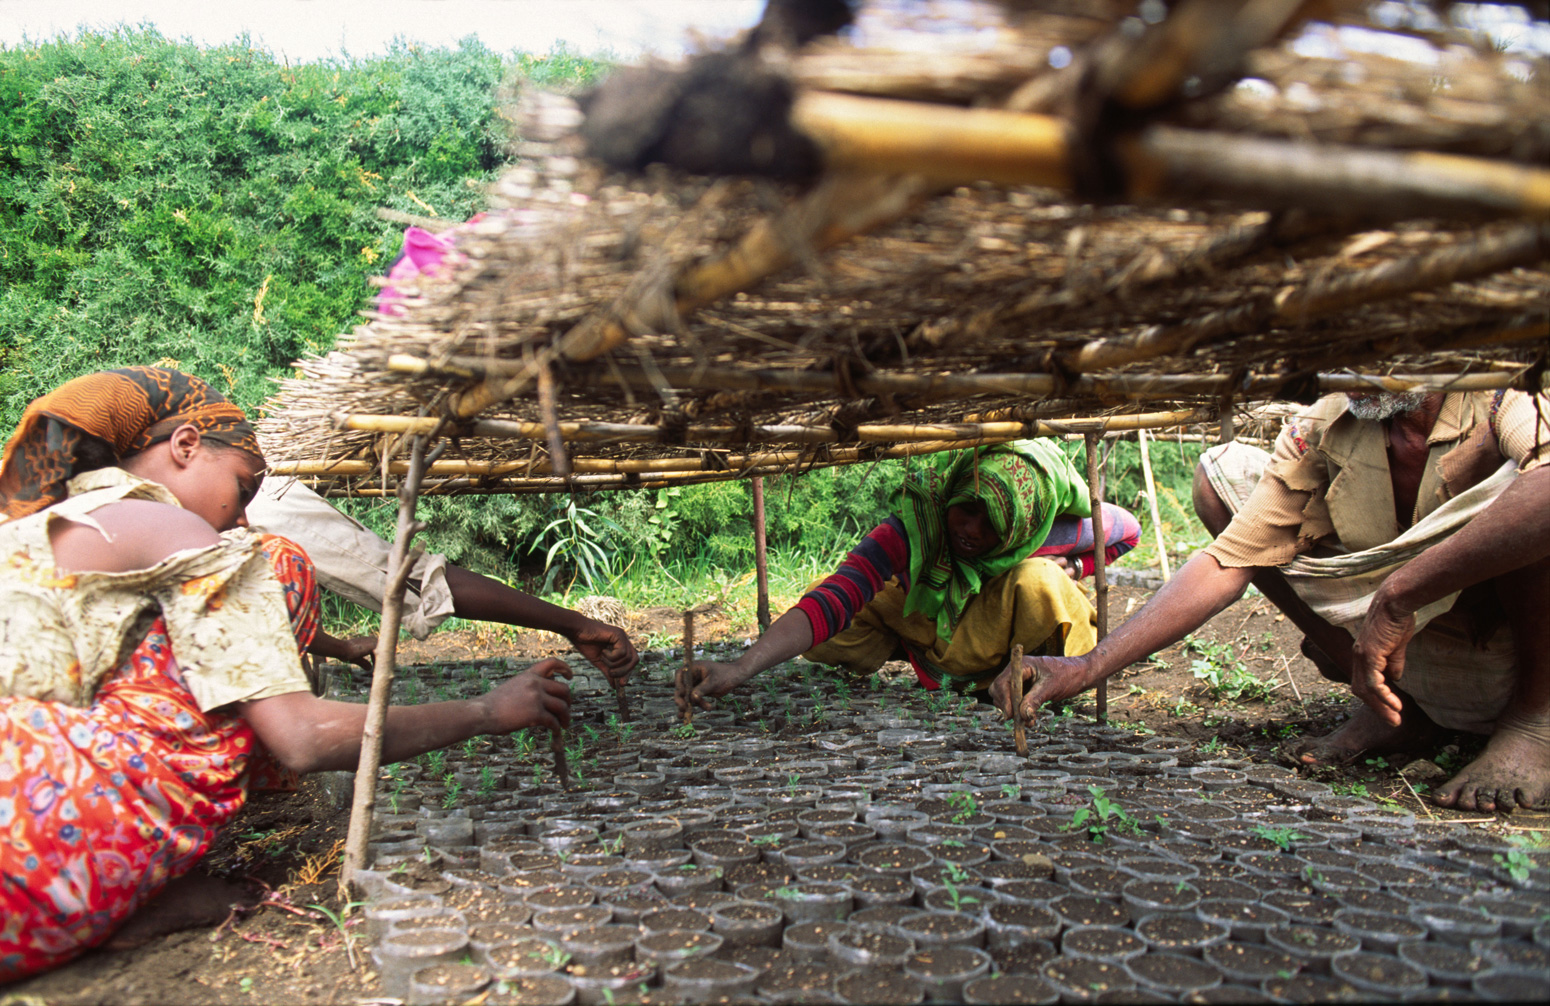 Members of the local community in a tree nursery tending tree seedlings for reforestation in Ethiopia_AHTW62